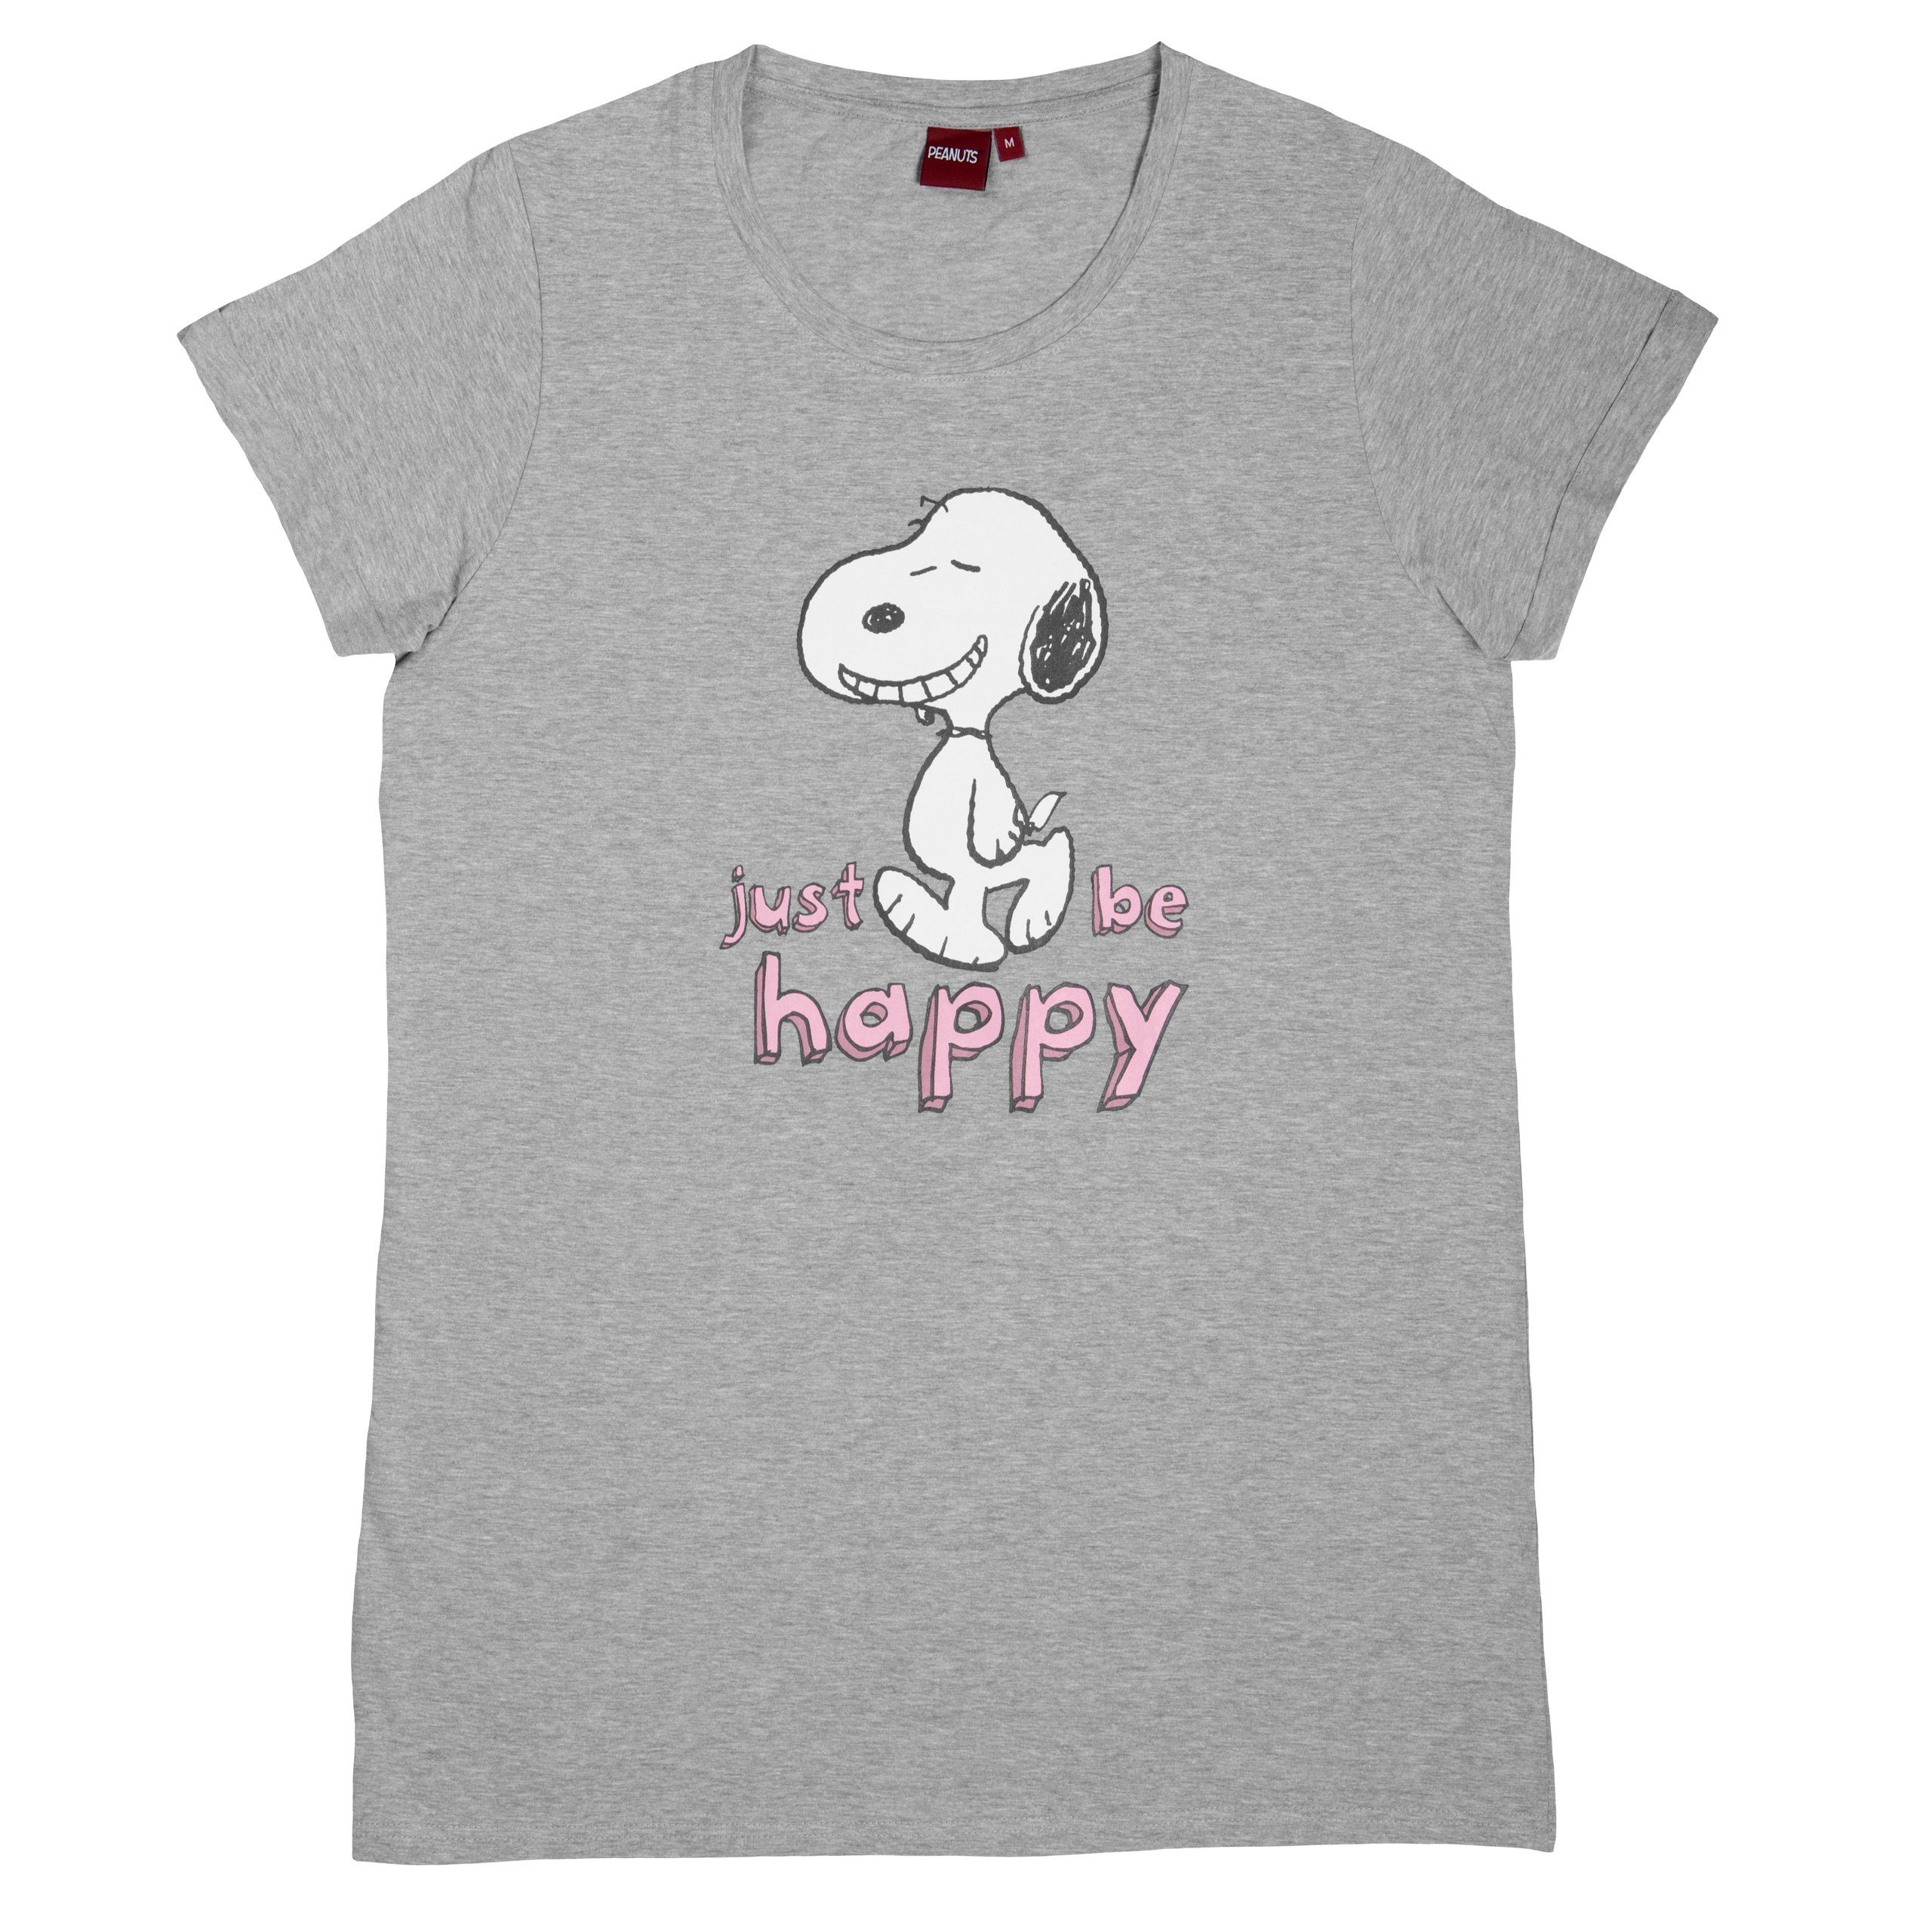 Snoopy Mode online kaufen » Snoopy Bekleidung